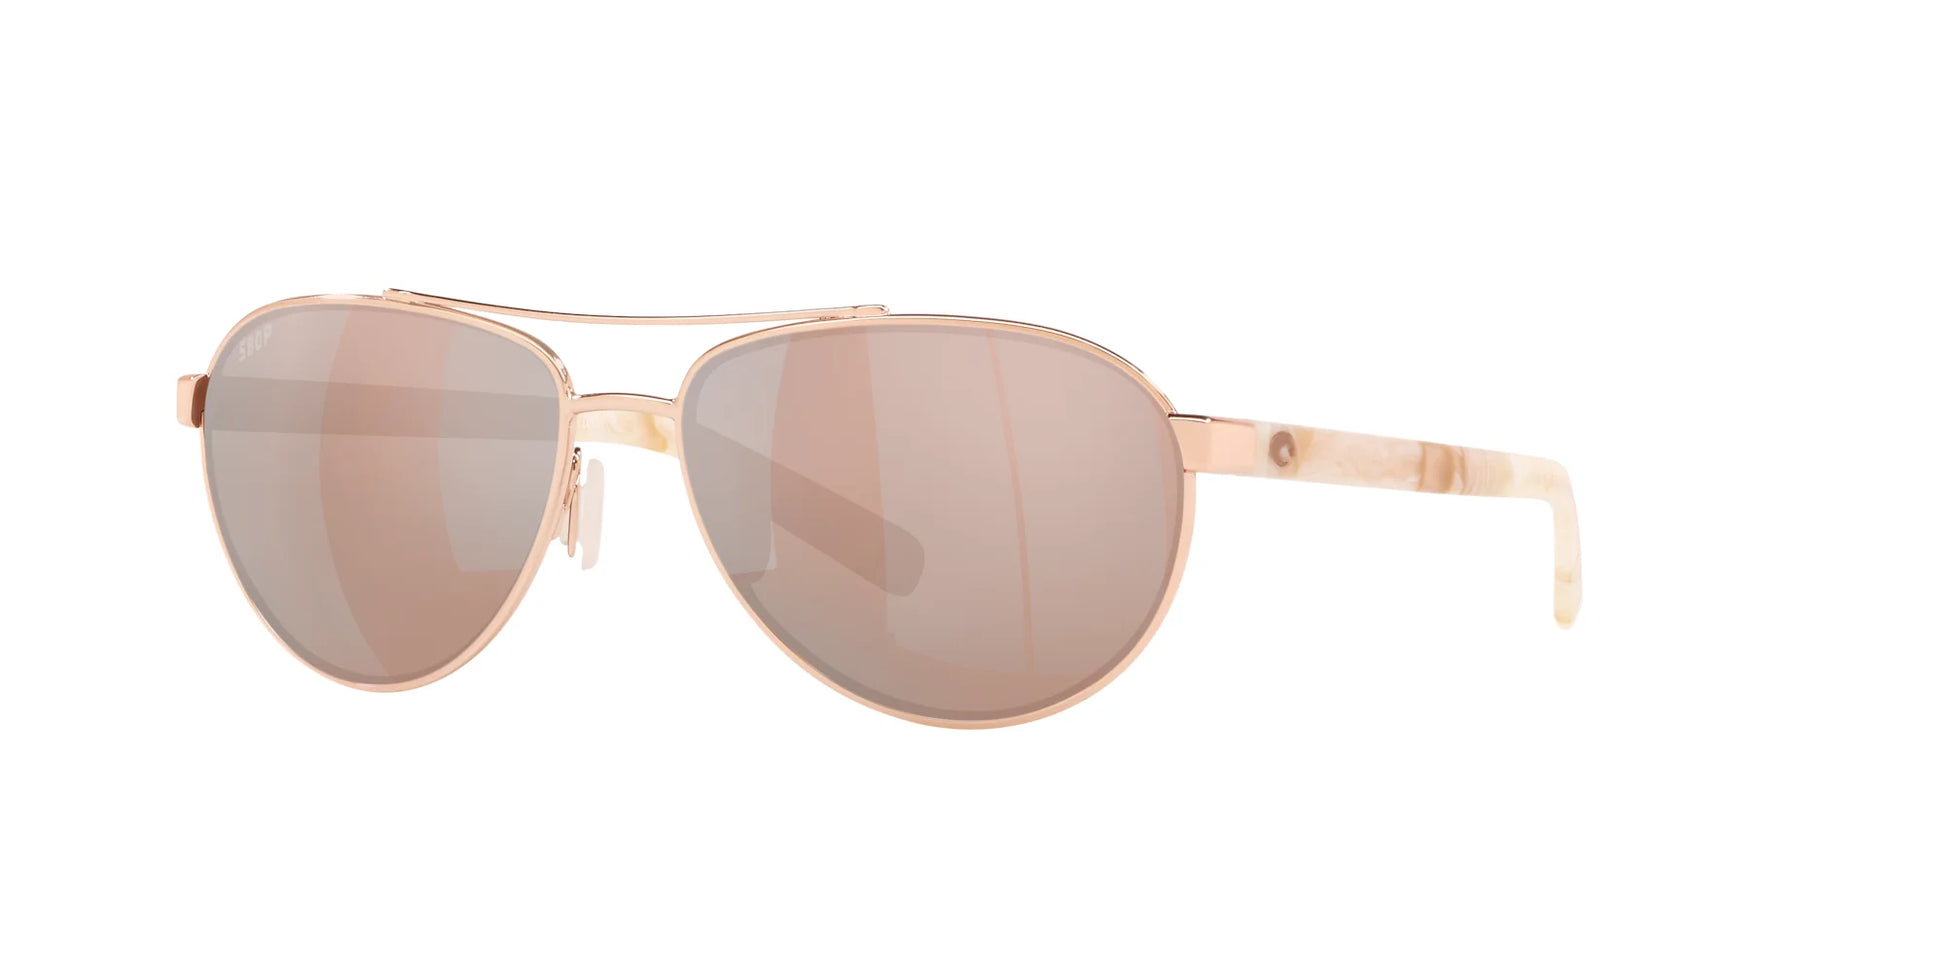 Costa FERNANDINA 6S4007 Sunglasses Rose Gold / Copper Silver Mirror